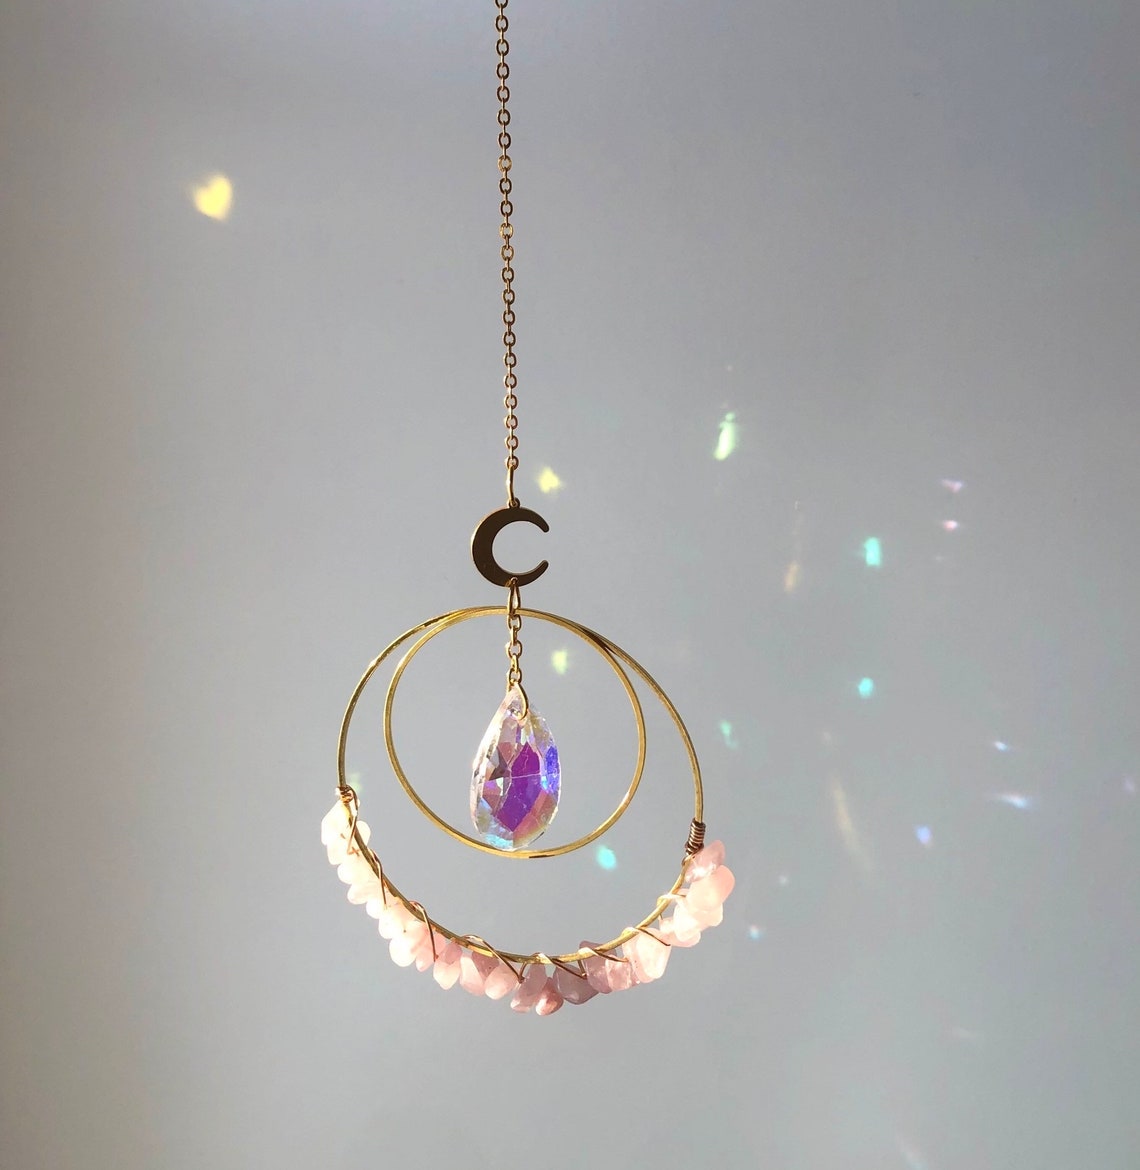 Hanging round rose quartz crystal chips suncatcher in sunlight